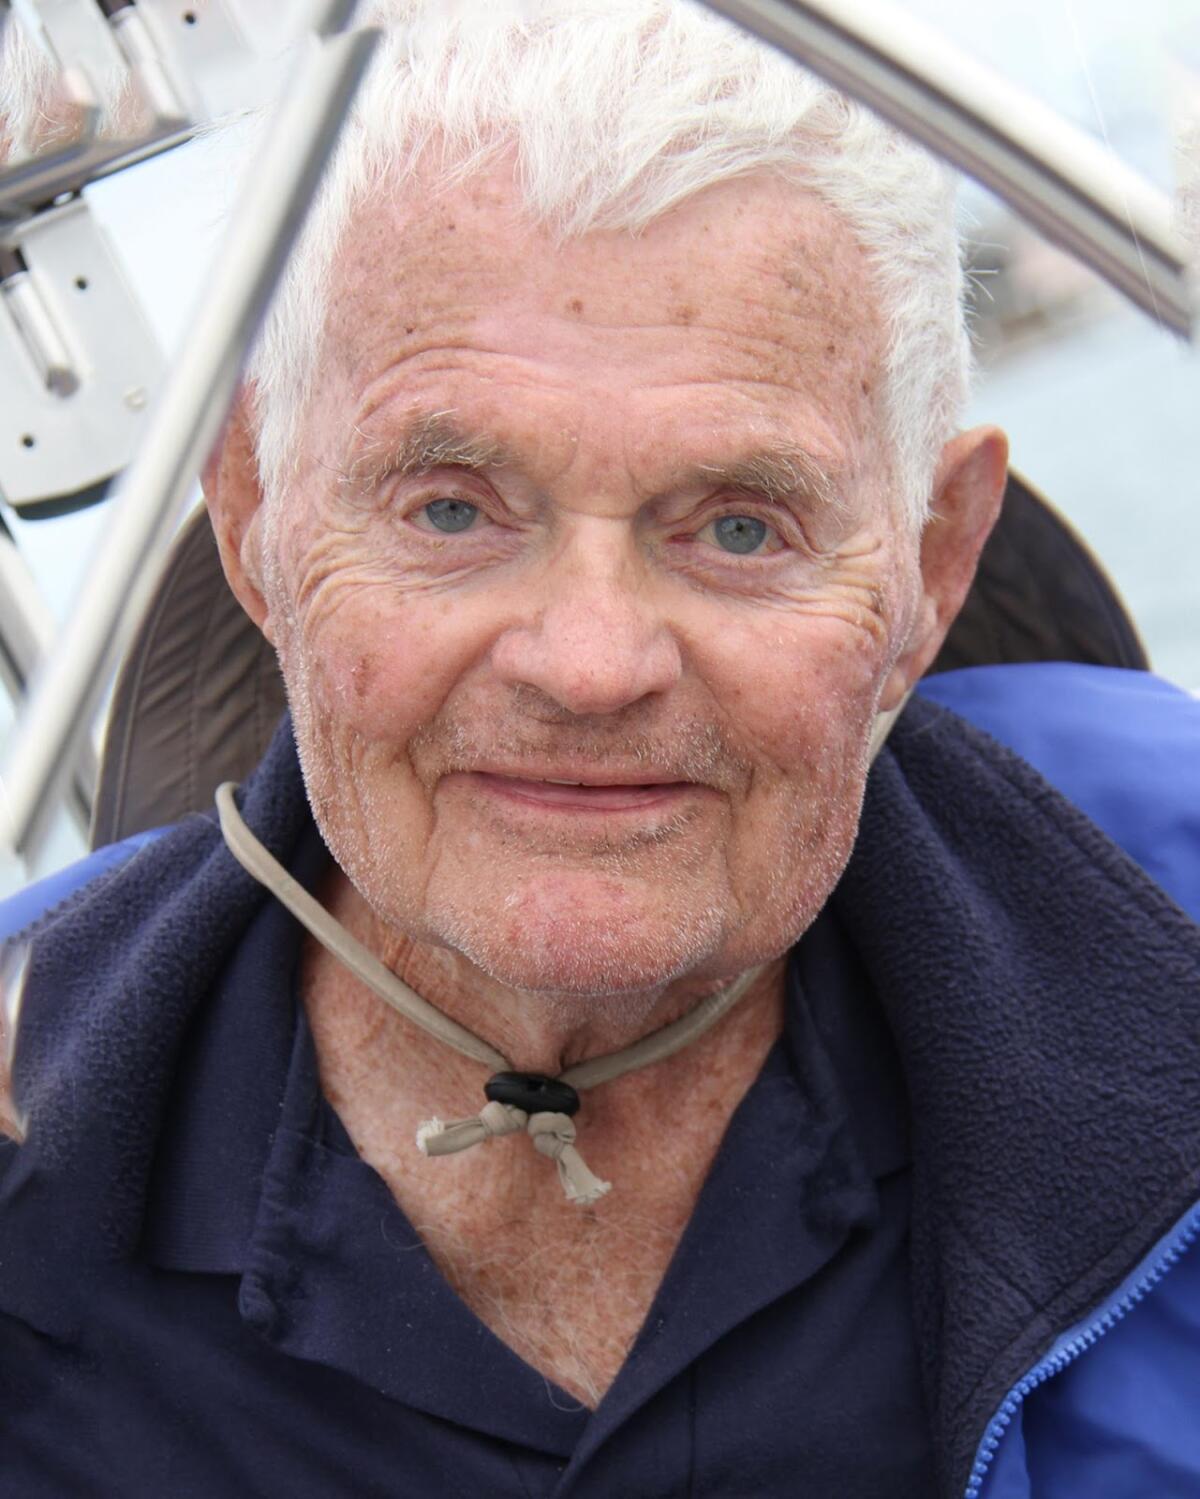 Joe Degenhardt was a member of Bahia Corinthian Yacht Club for 40 years.